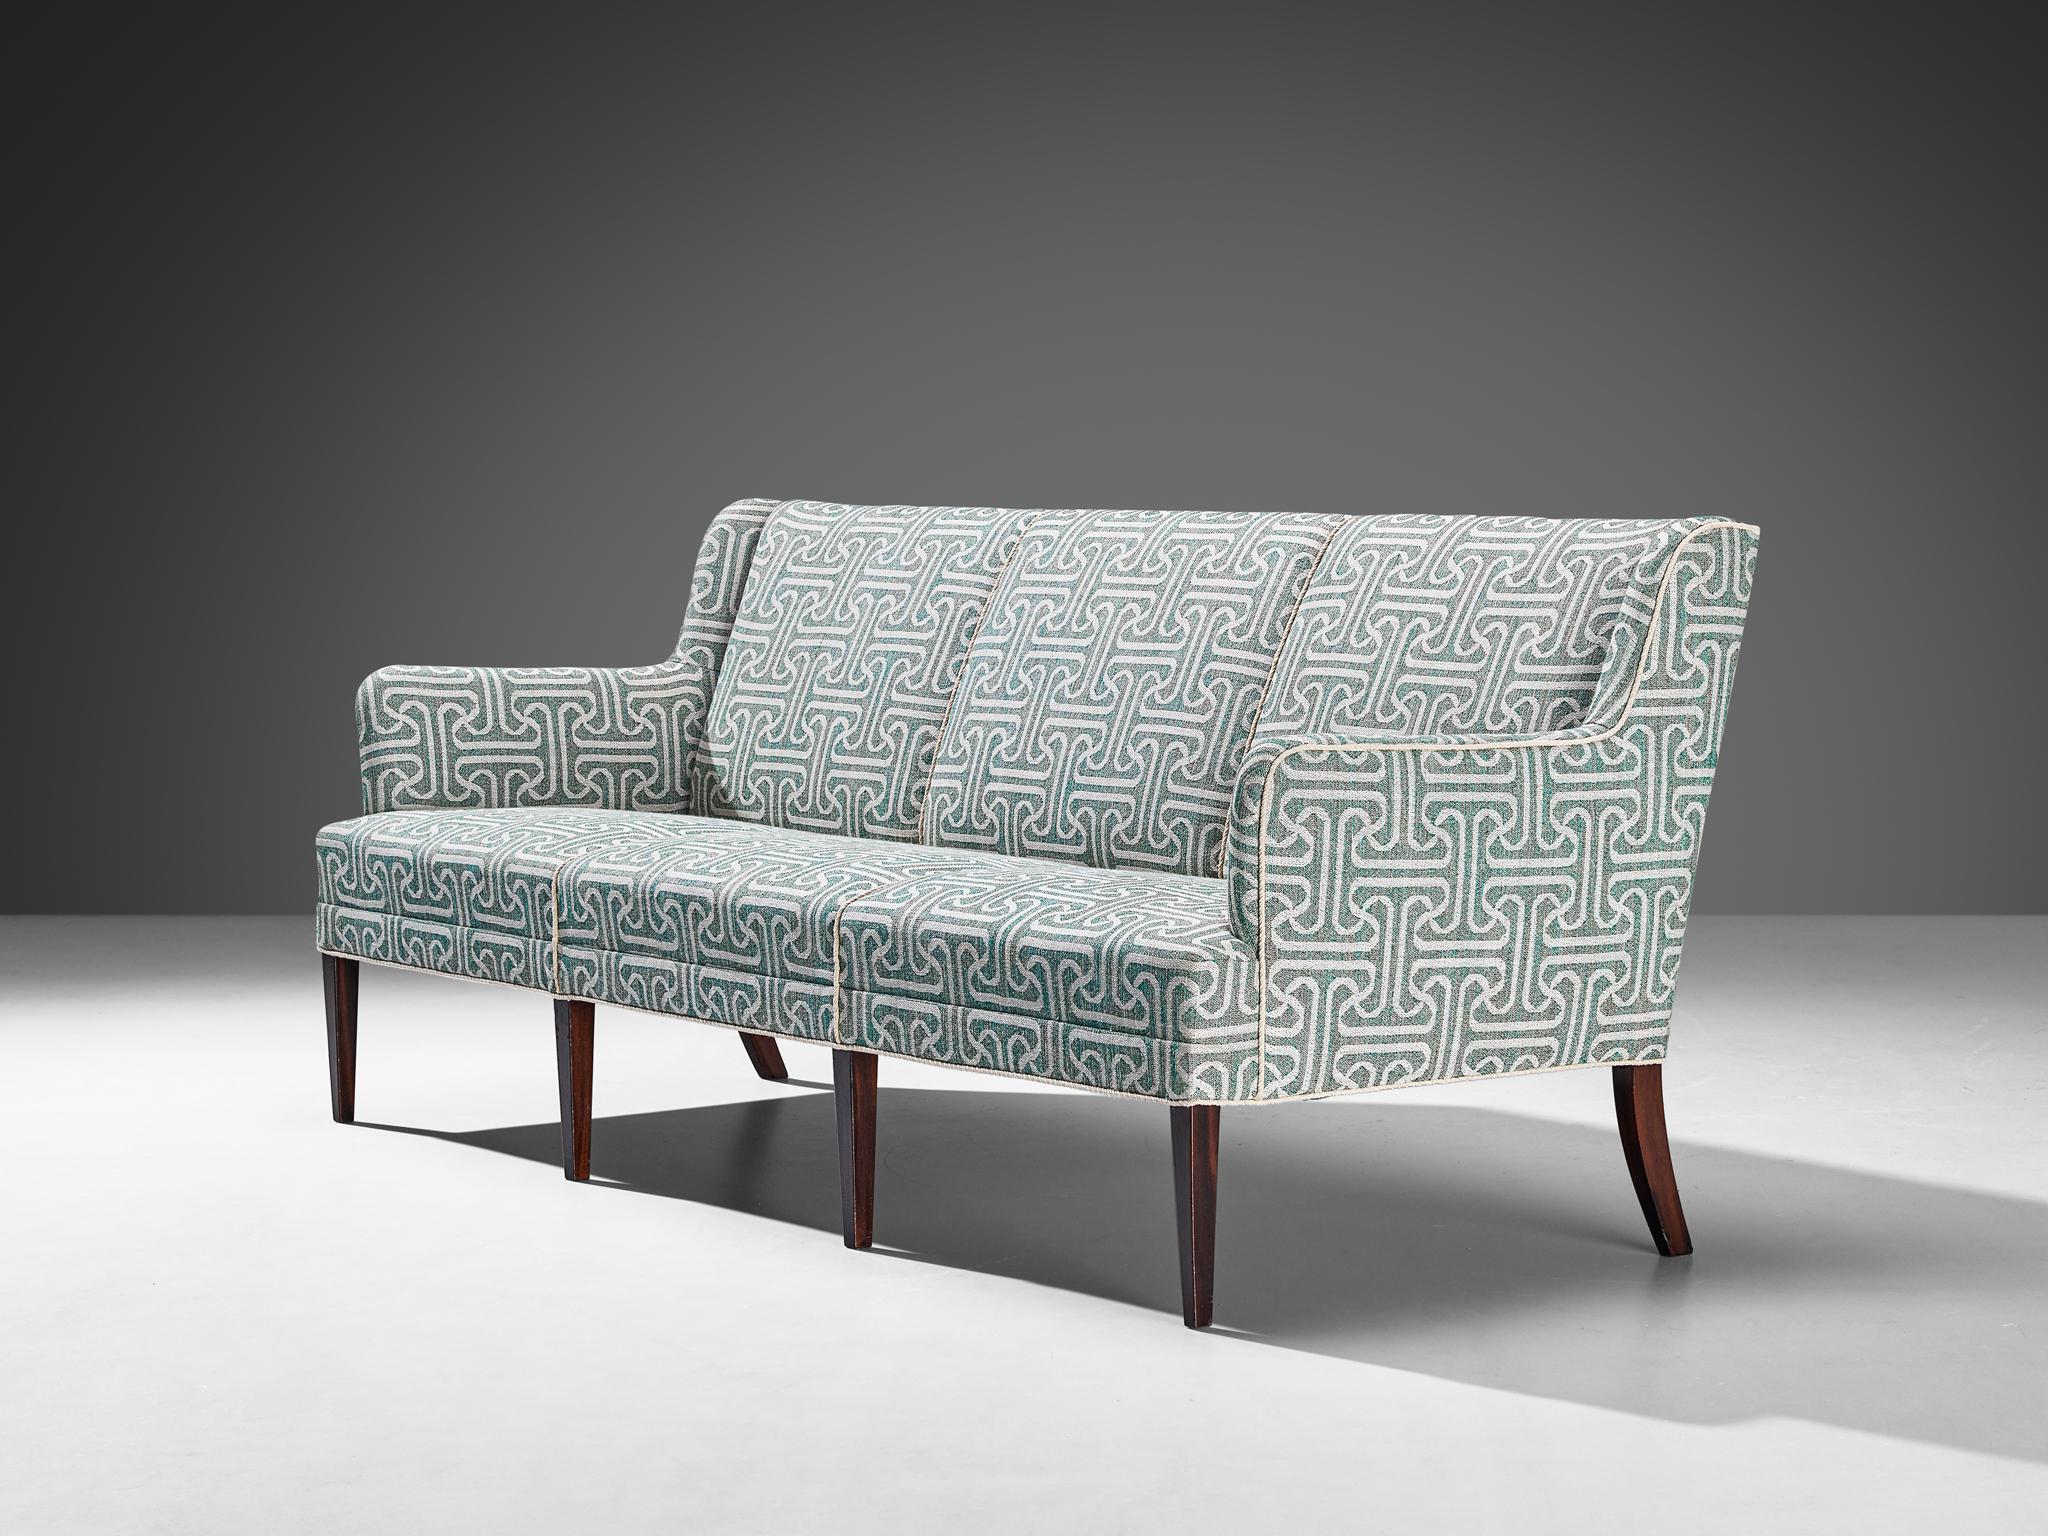 Sofa, wood, fabric by Evolution21 